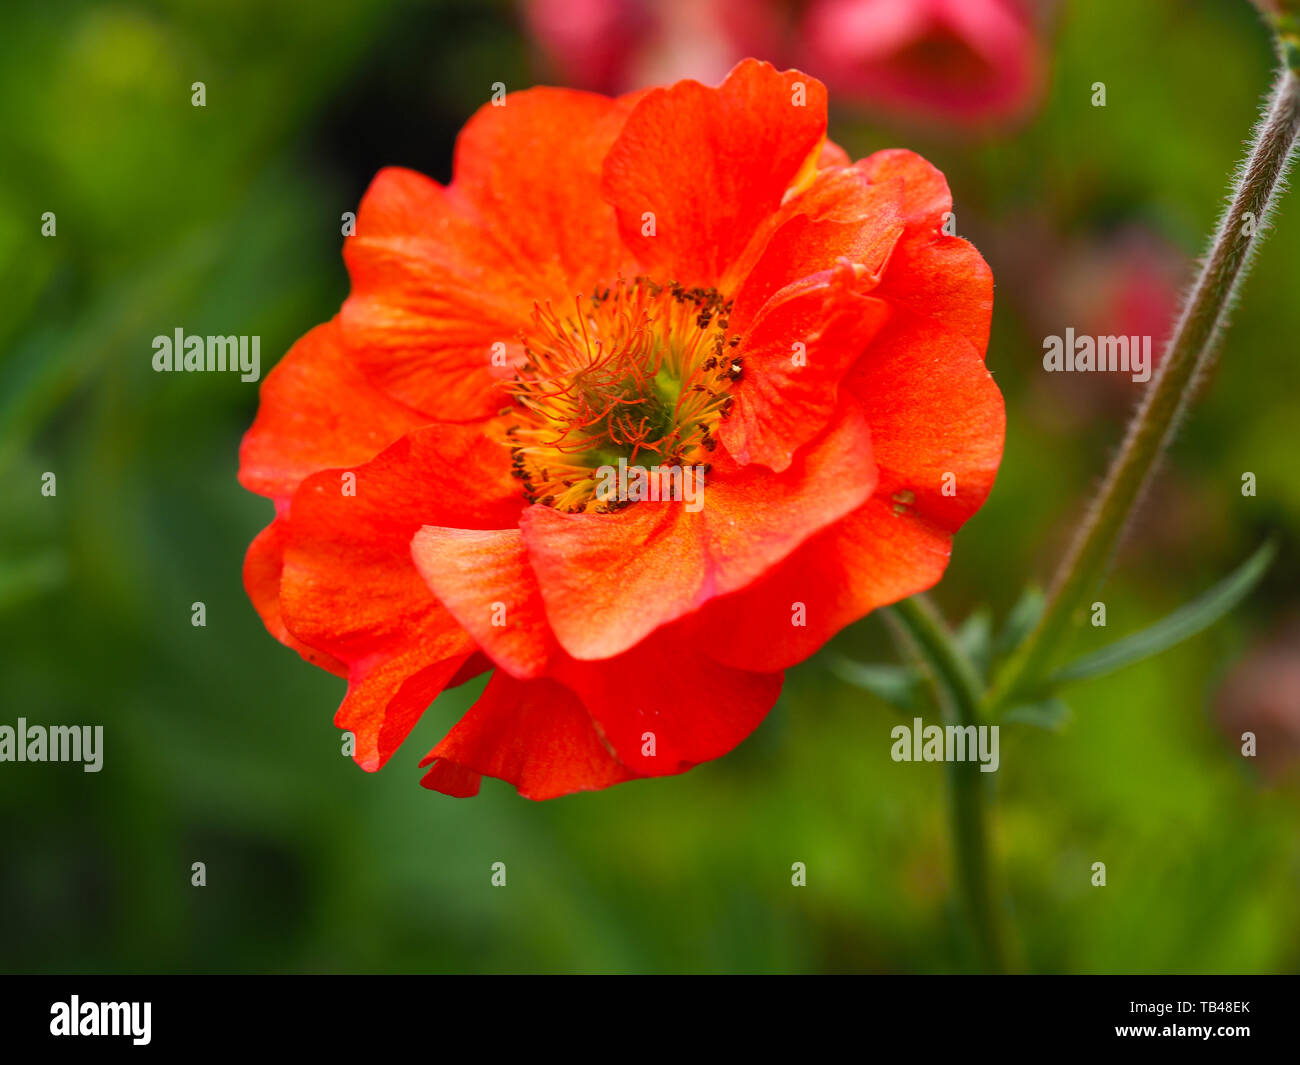 Closeup of a bright orange Geum flower, variety Scarlet Tempest Stock Photo